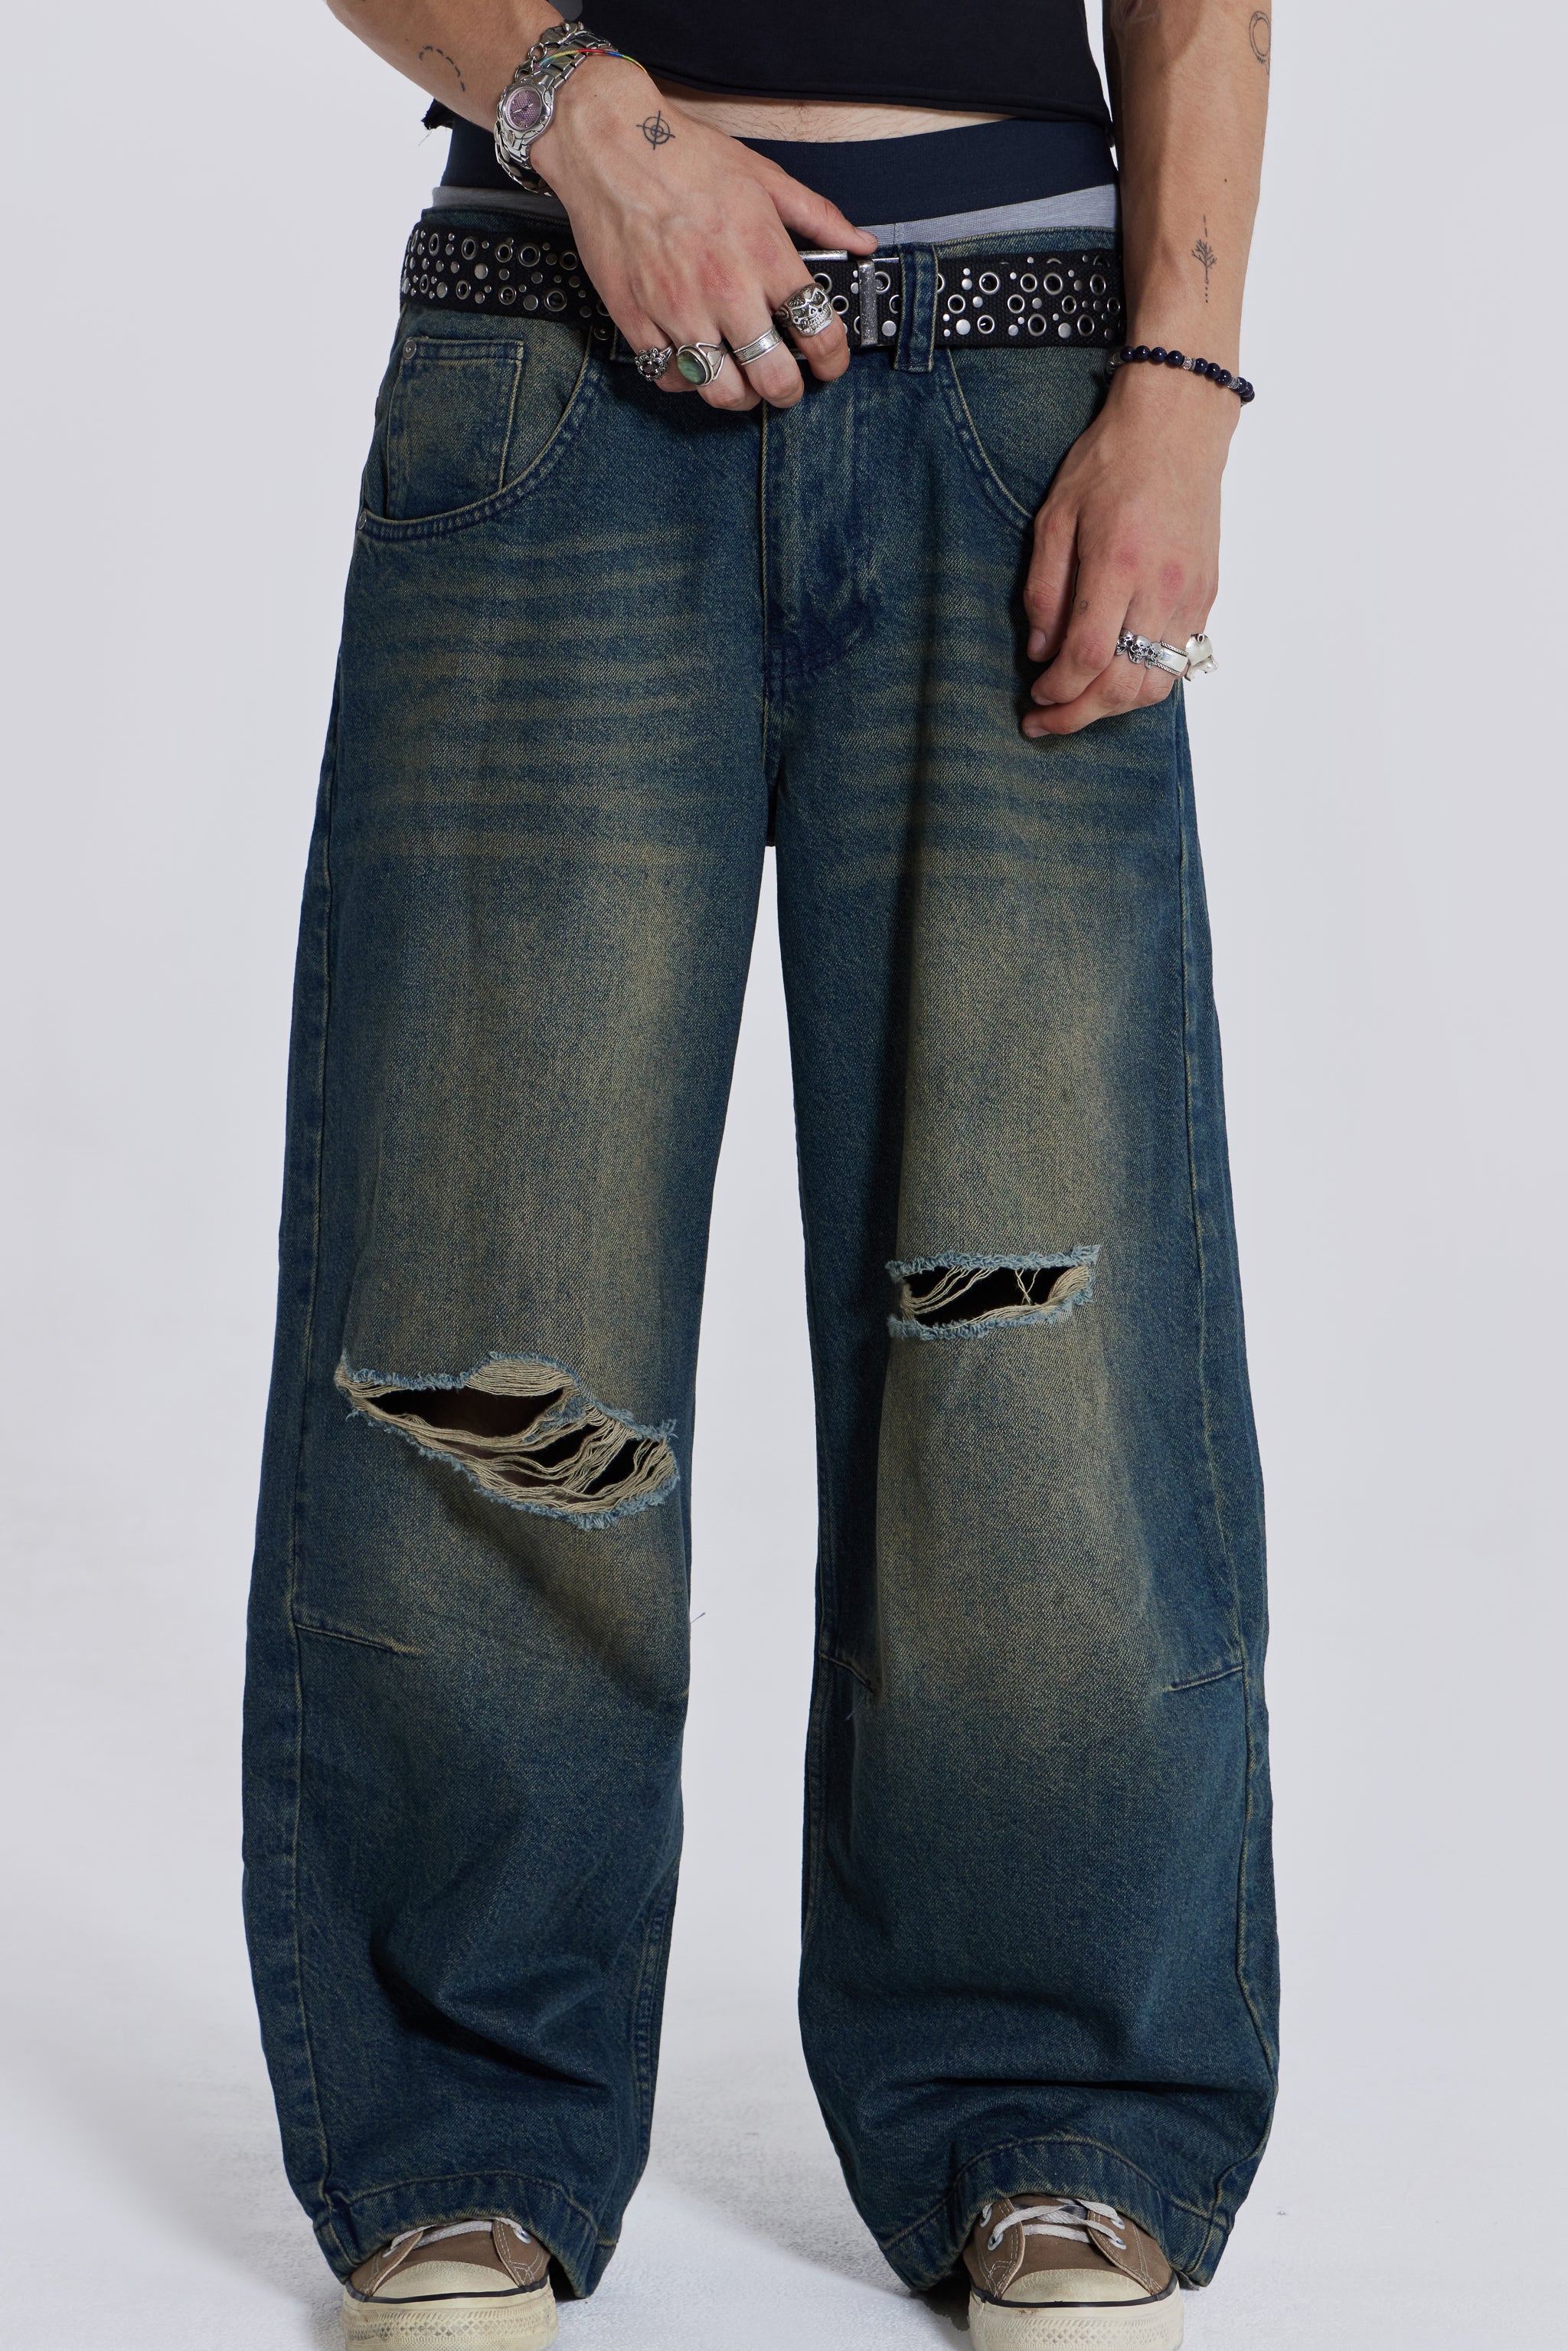 jaded london washed jeans w30 | www.gamutgallerympls.com